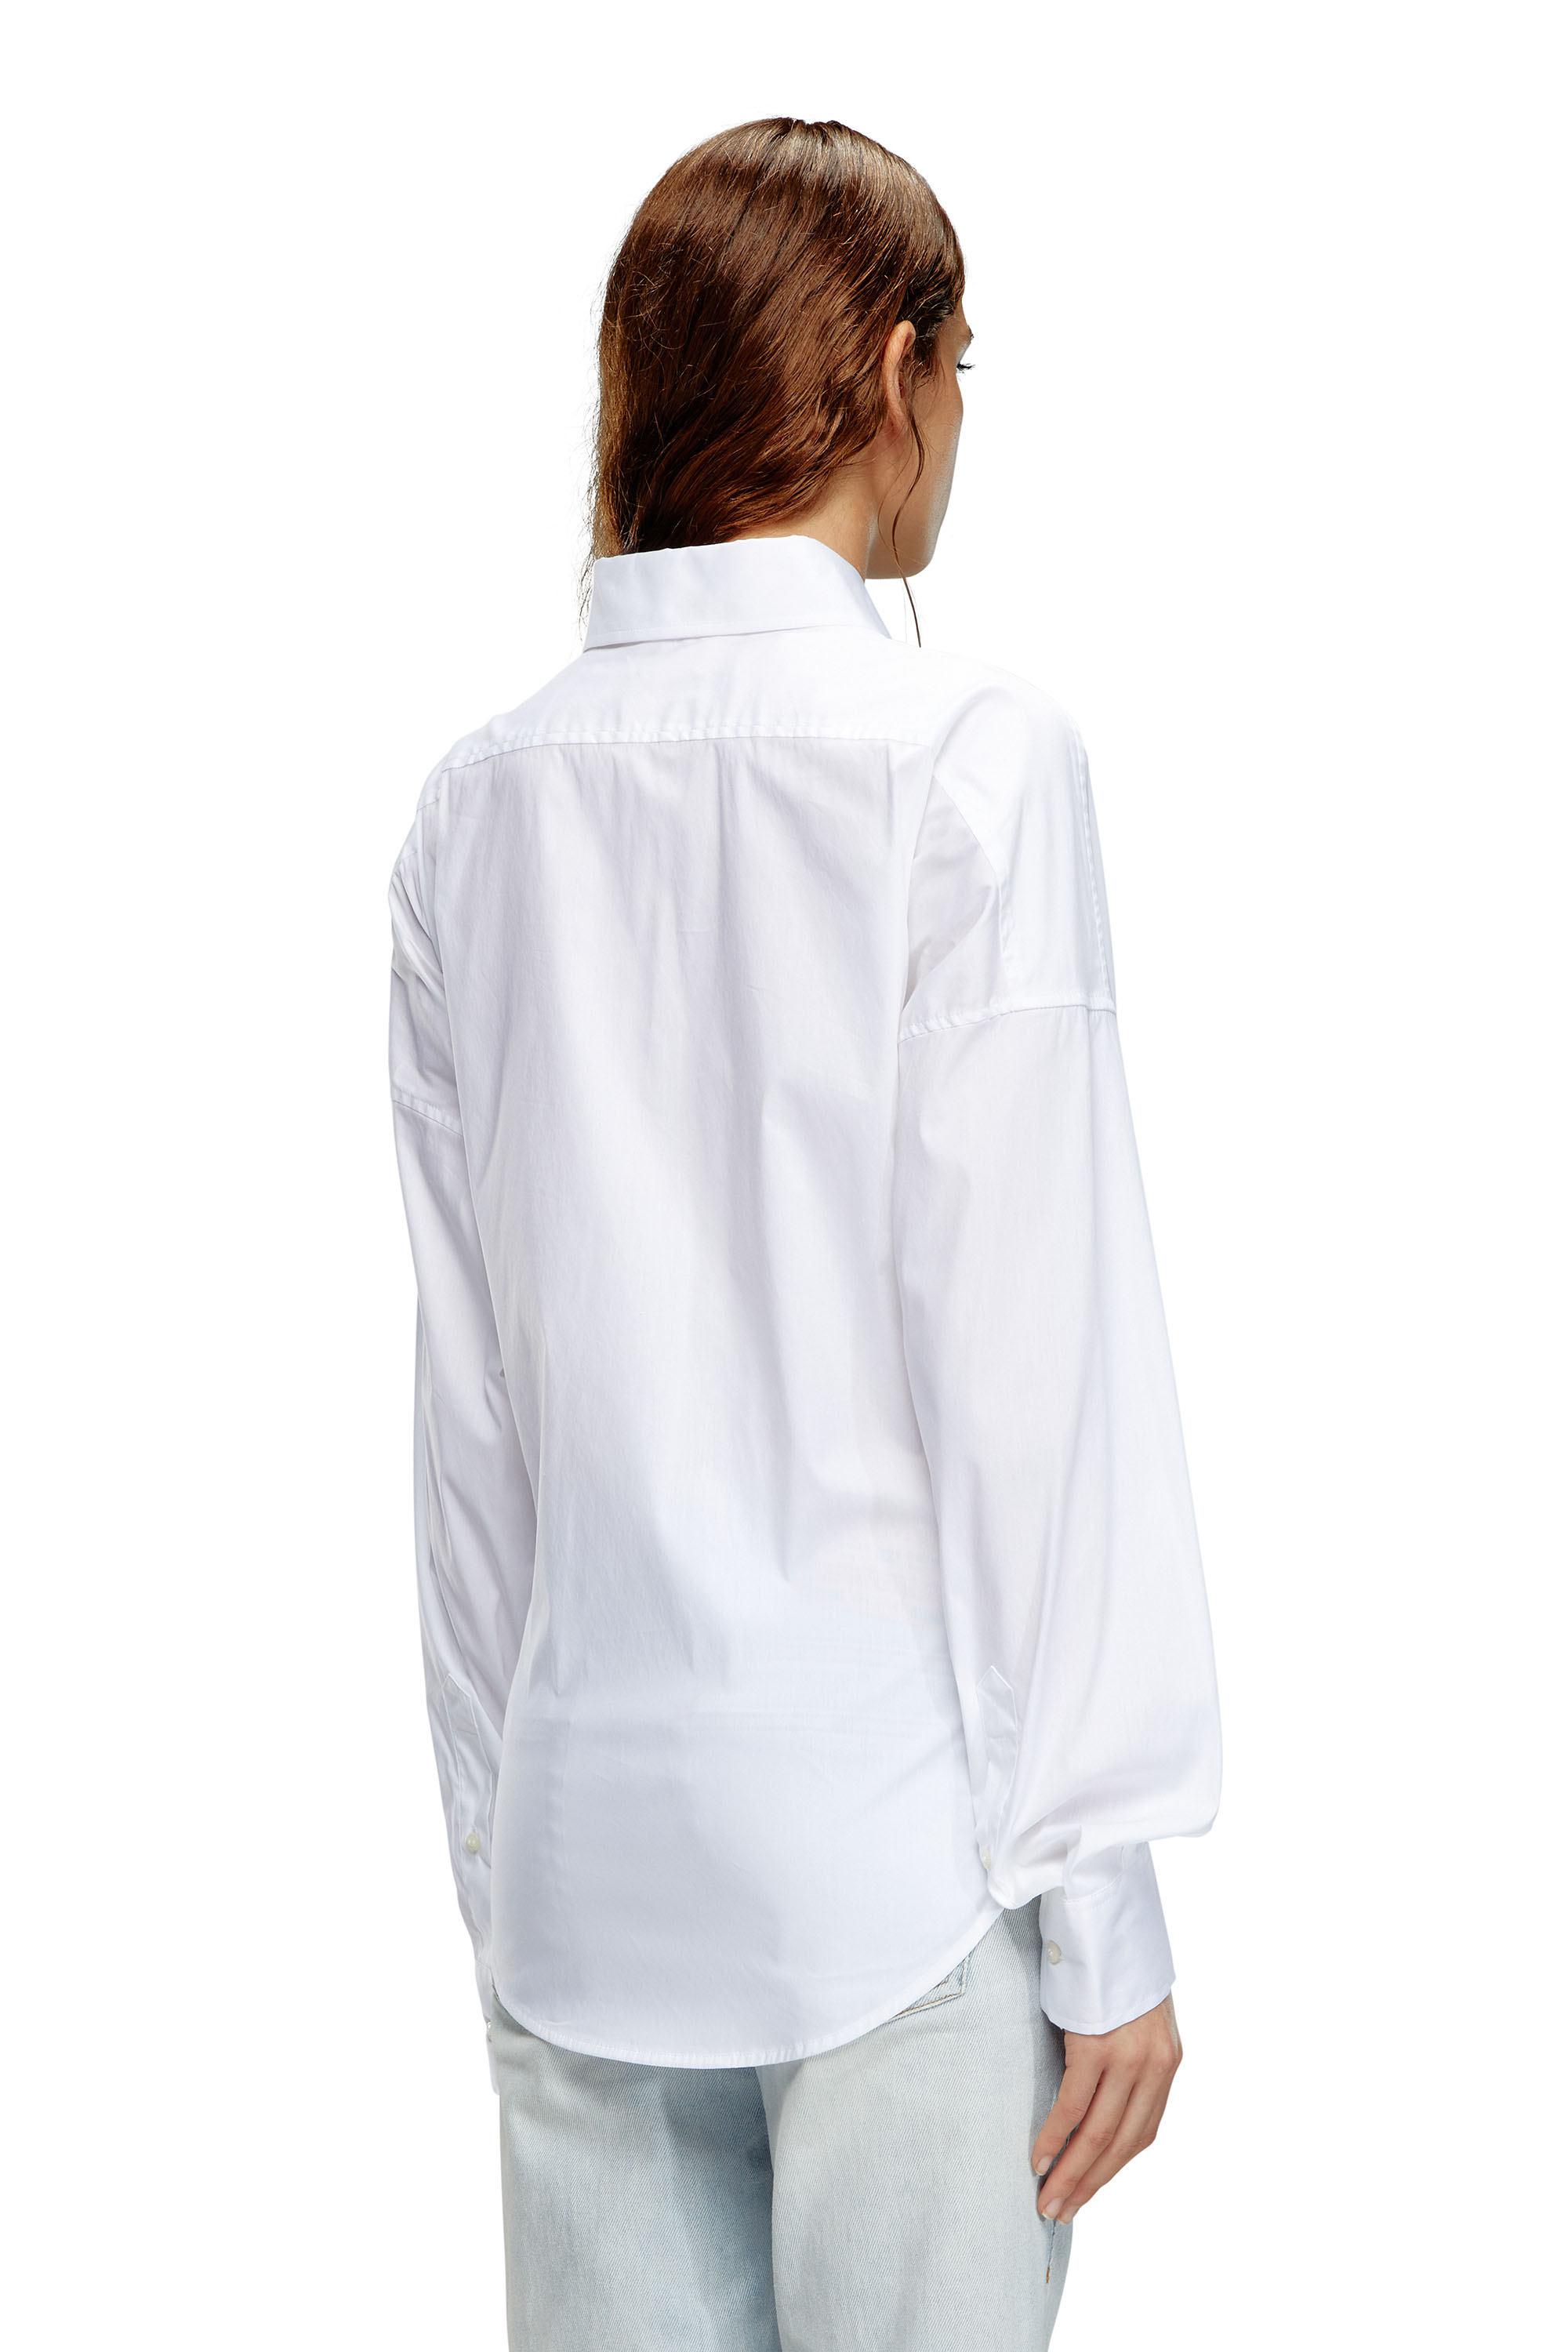 LSDJGDDE Long Sleeve Blouse Women Women Shirts Blouses Femme White Chiffon  Blouse Shirt Women Tops (Color : A, Size : 2XL Code) : : Clothing,  Shoes & Accessories